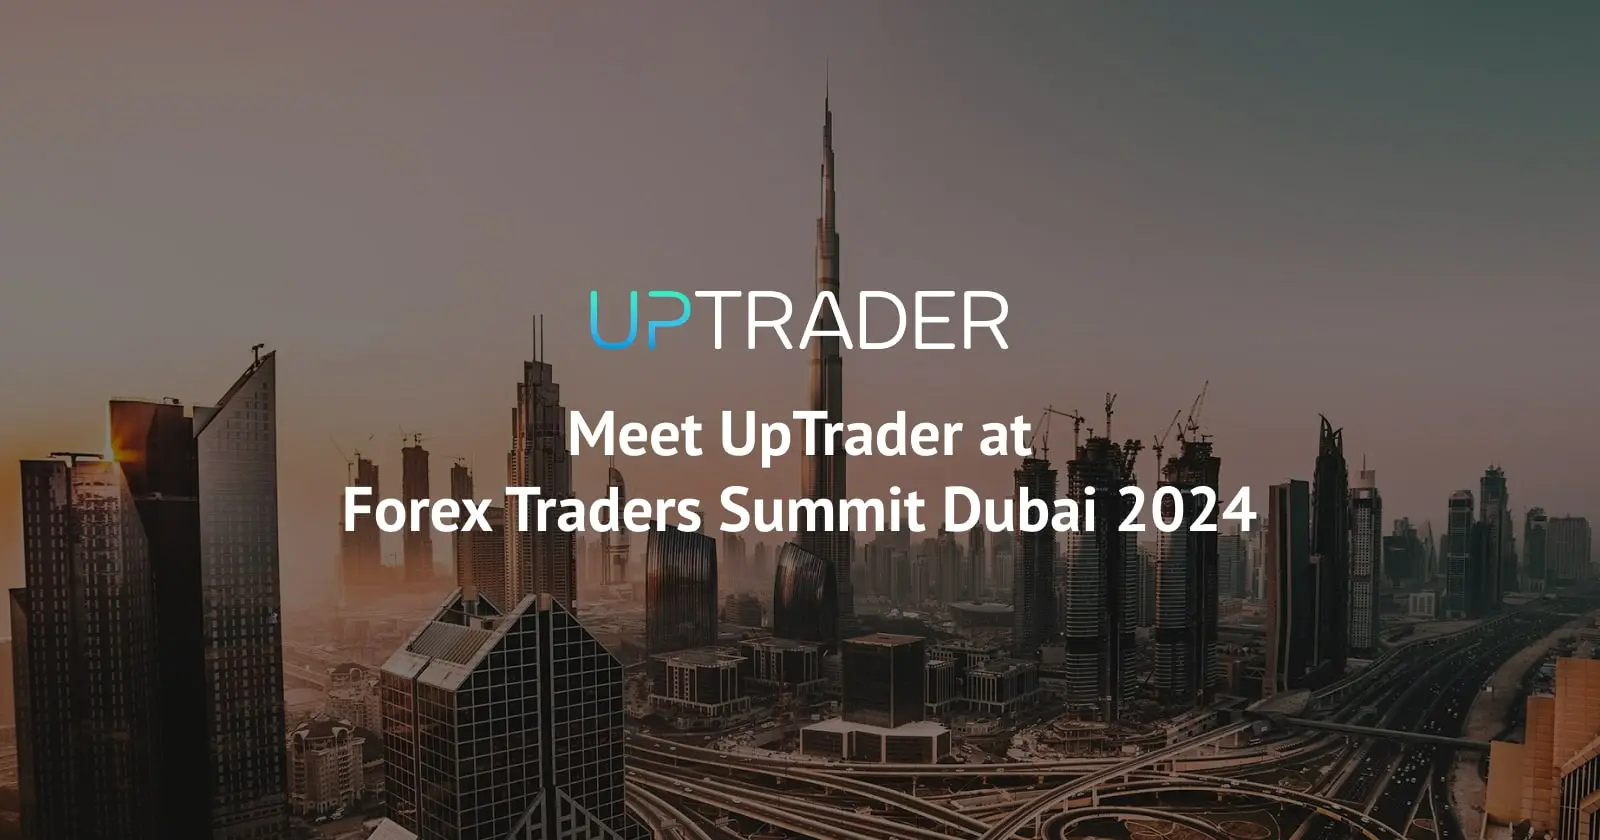 UpTrader Sets Its Sights on Forex Traders Summit Dubai 2024